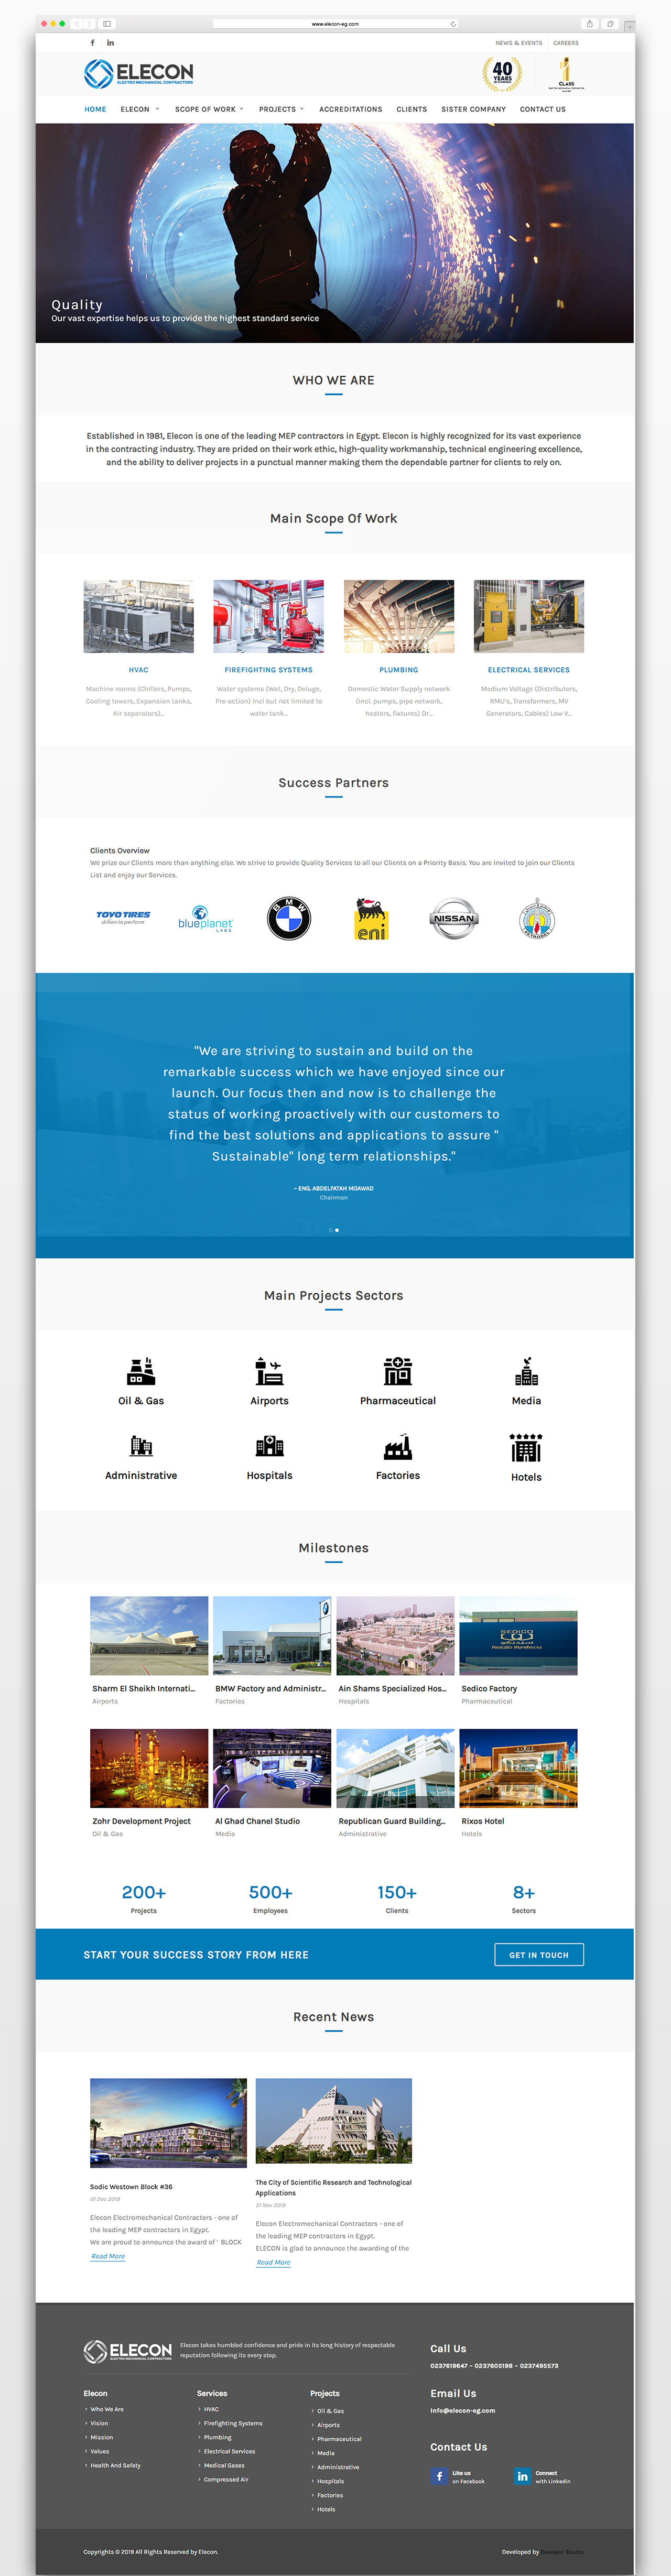 elecon website homepage design UX & UI development